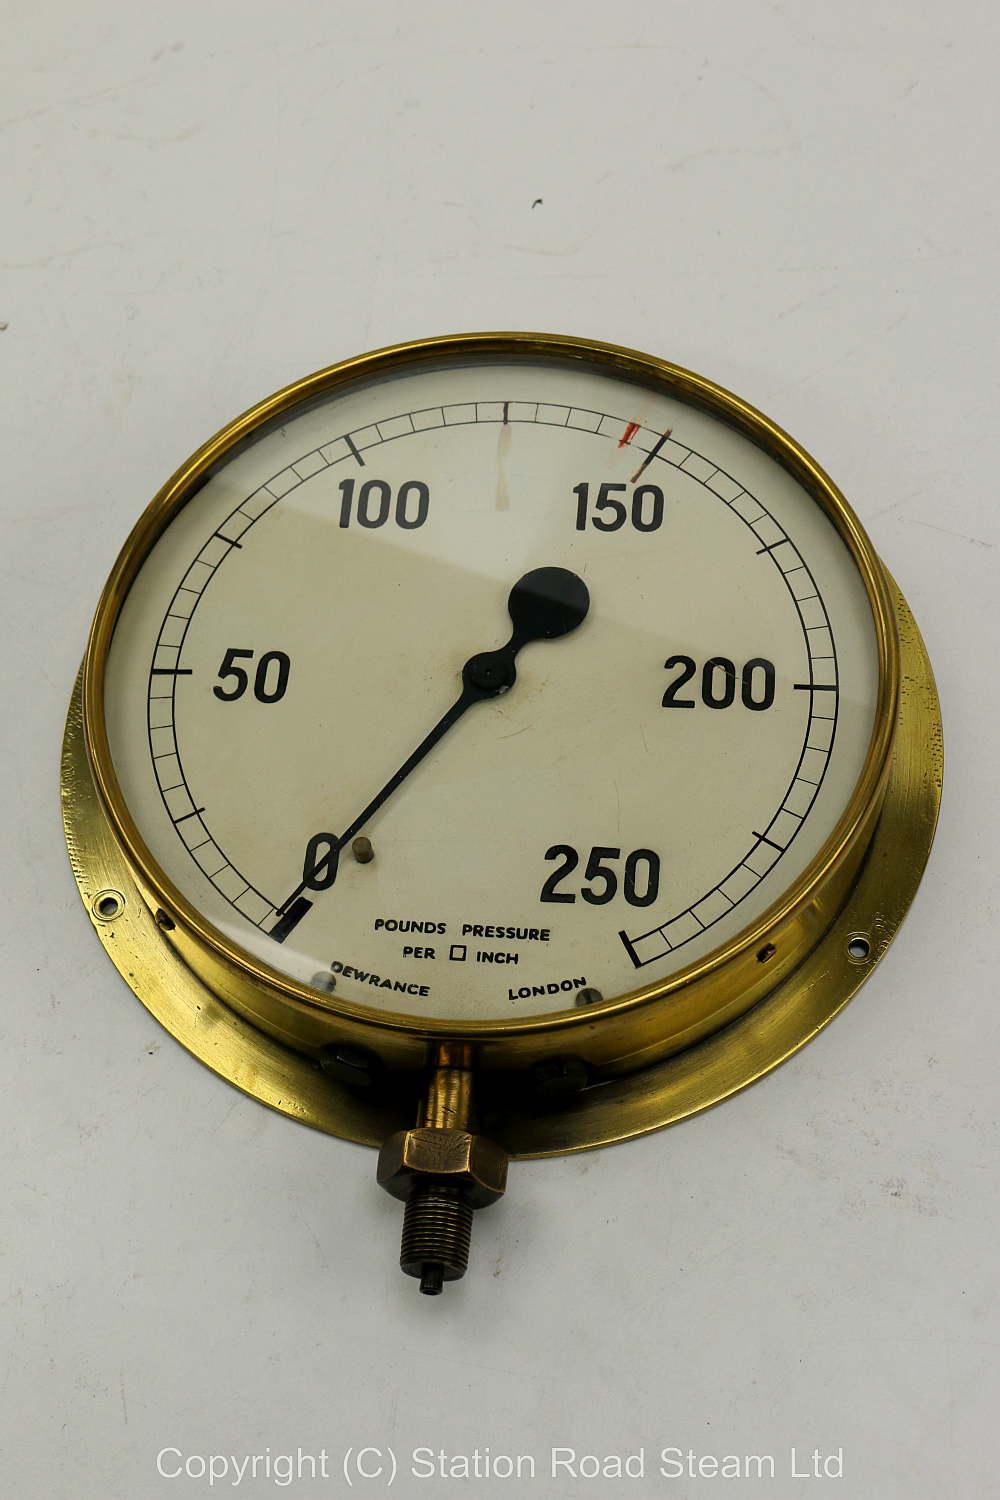 0 - 250psi 8 inch diameter Dewrance pressure gauge